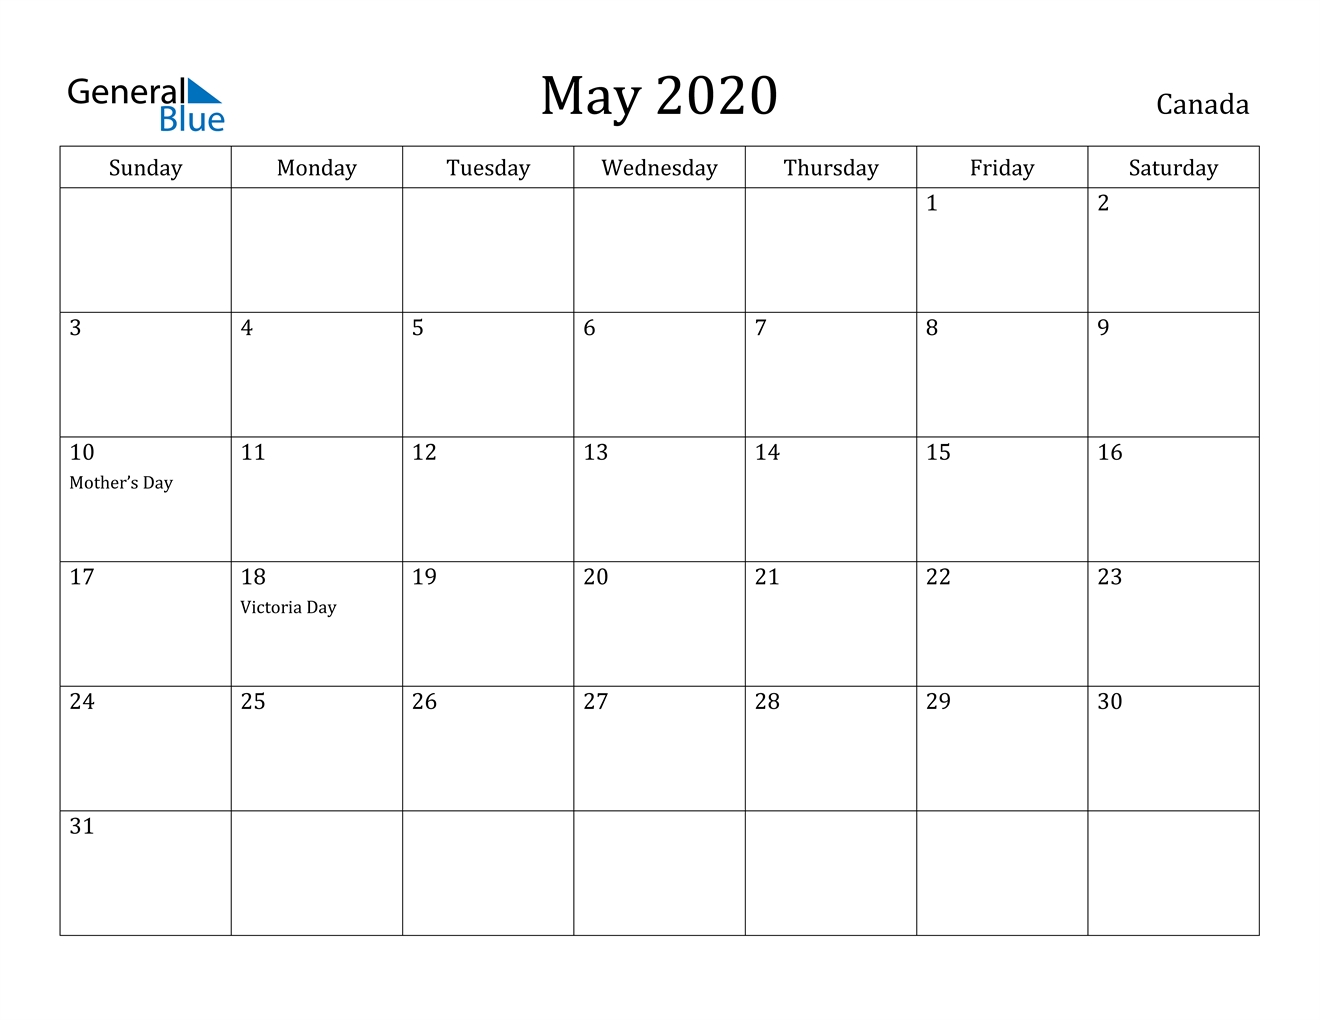 May 2020 Calendar - Canada